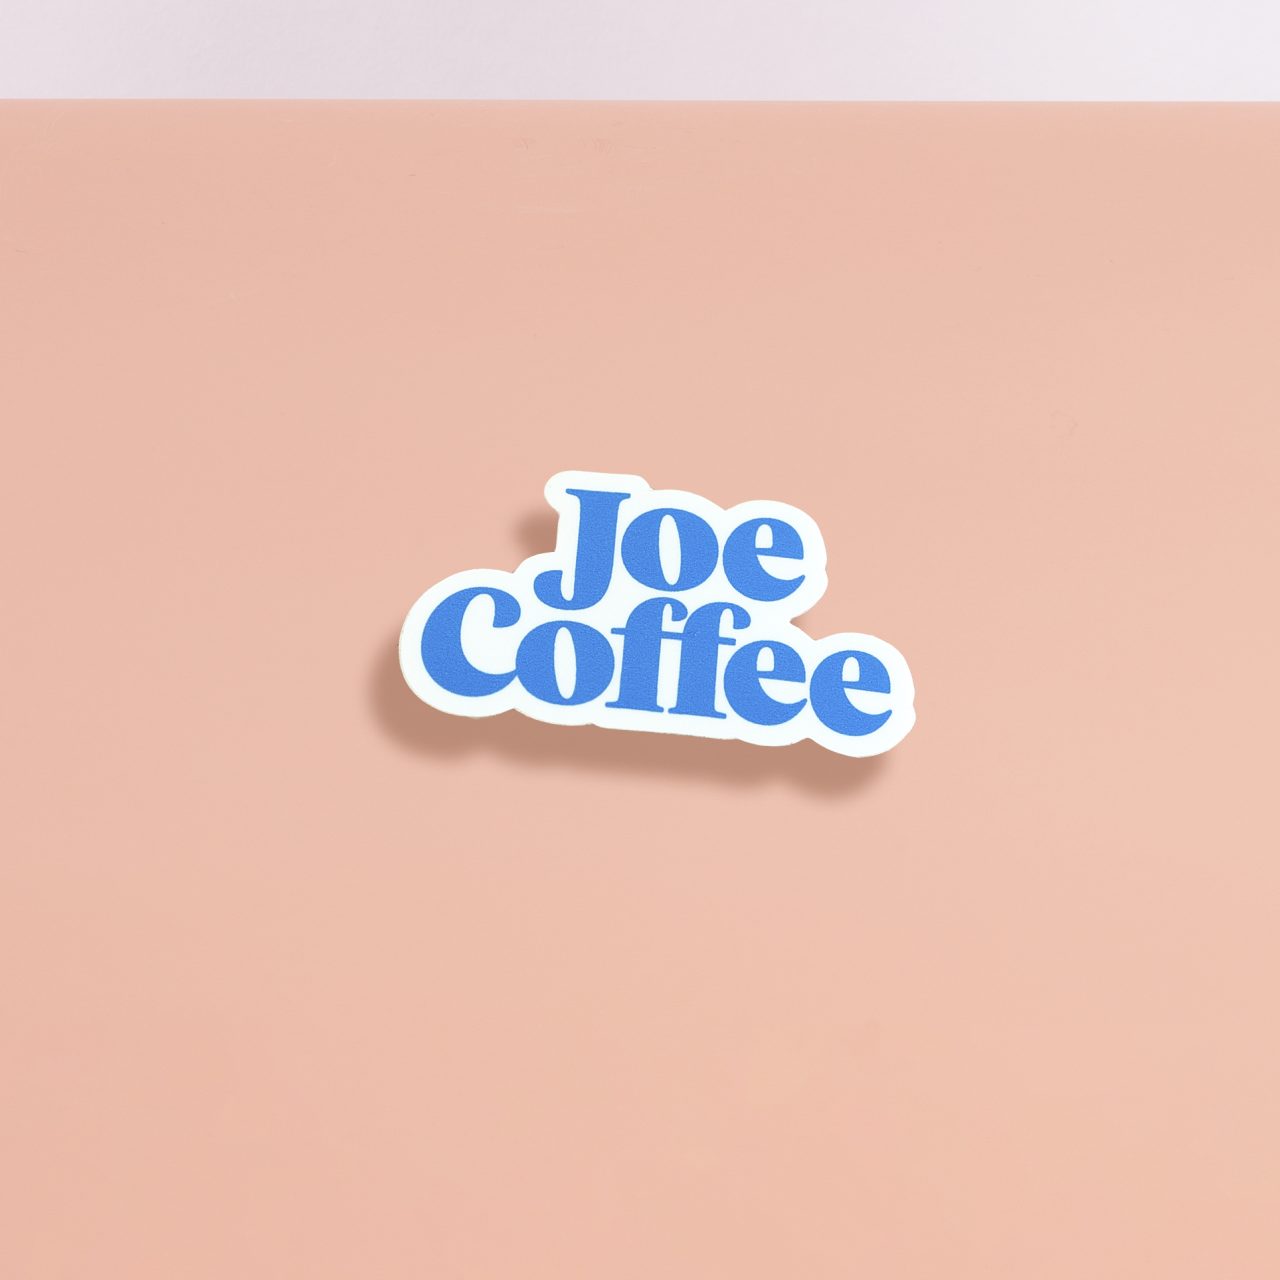 Joe Coffee logo sticker